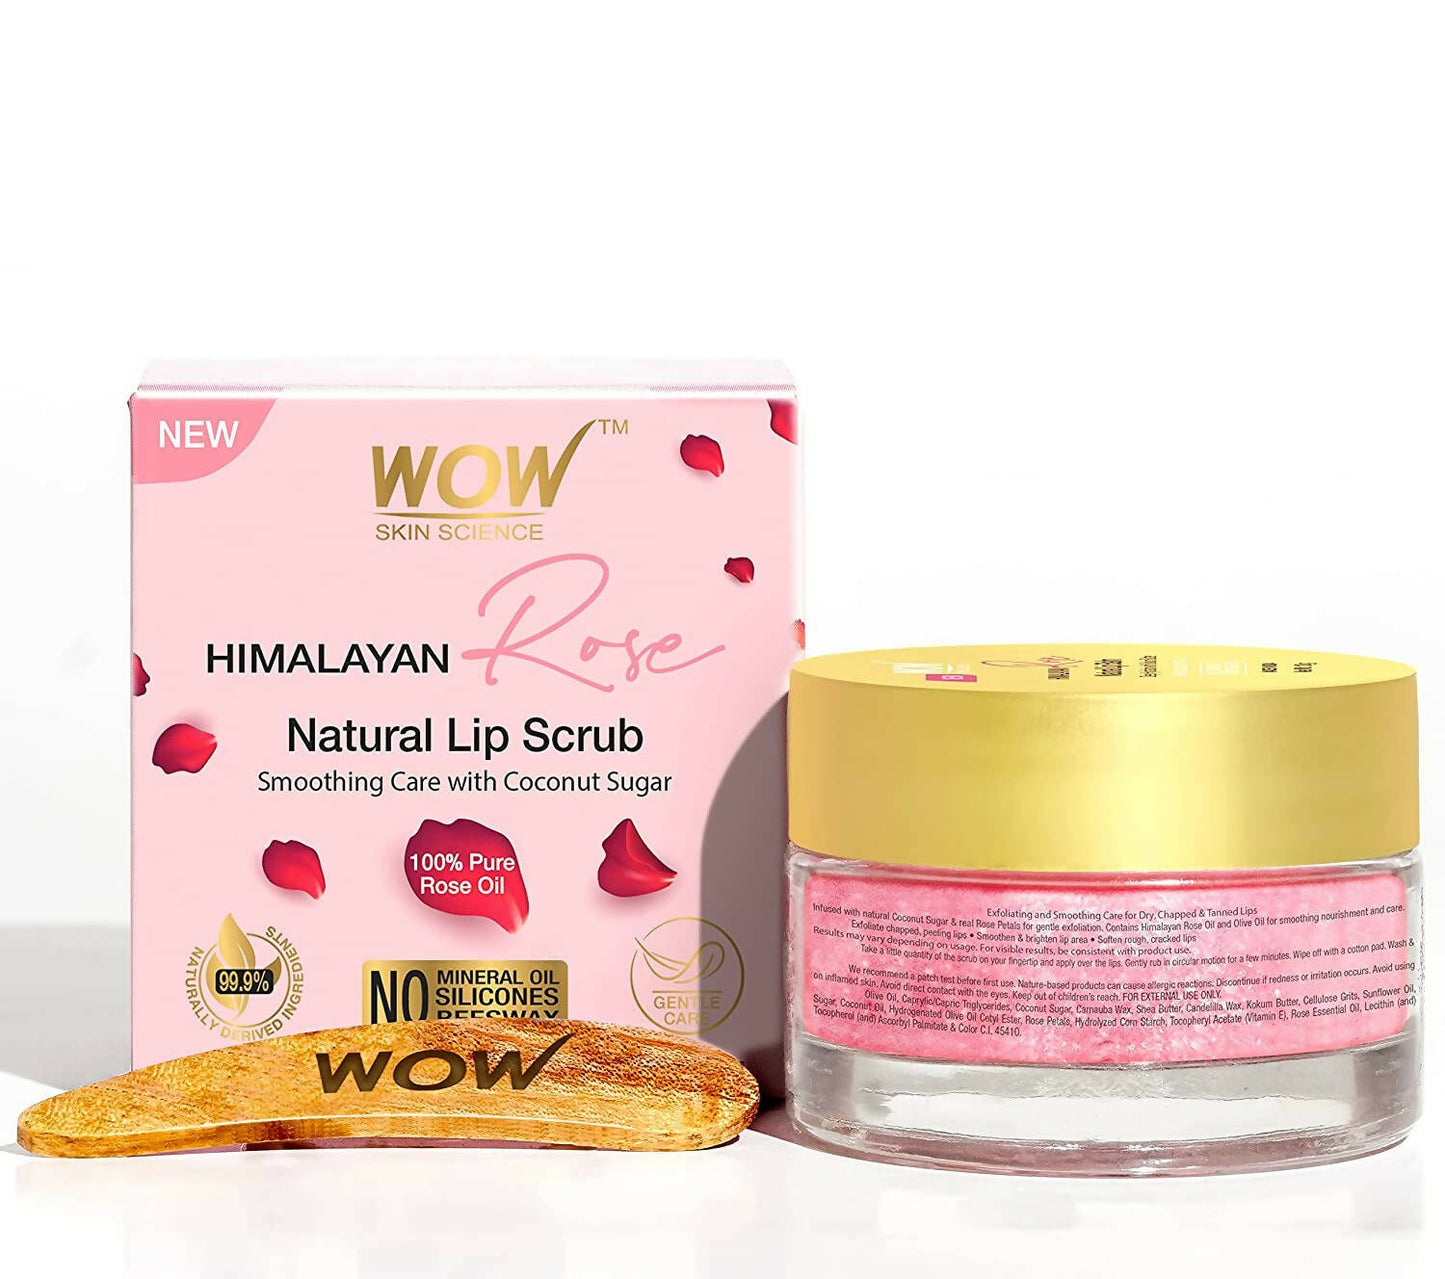 WOW Skin Science Himalayan Rose Lip Scrub - BUDNE